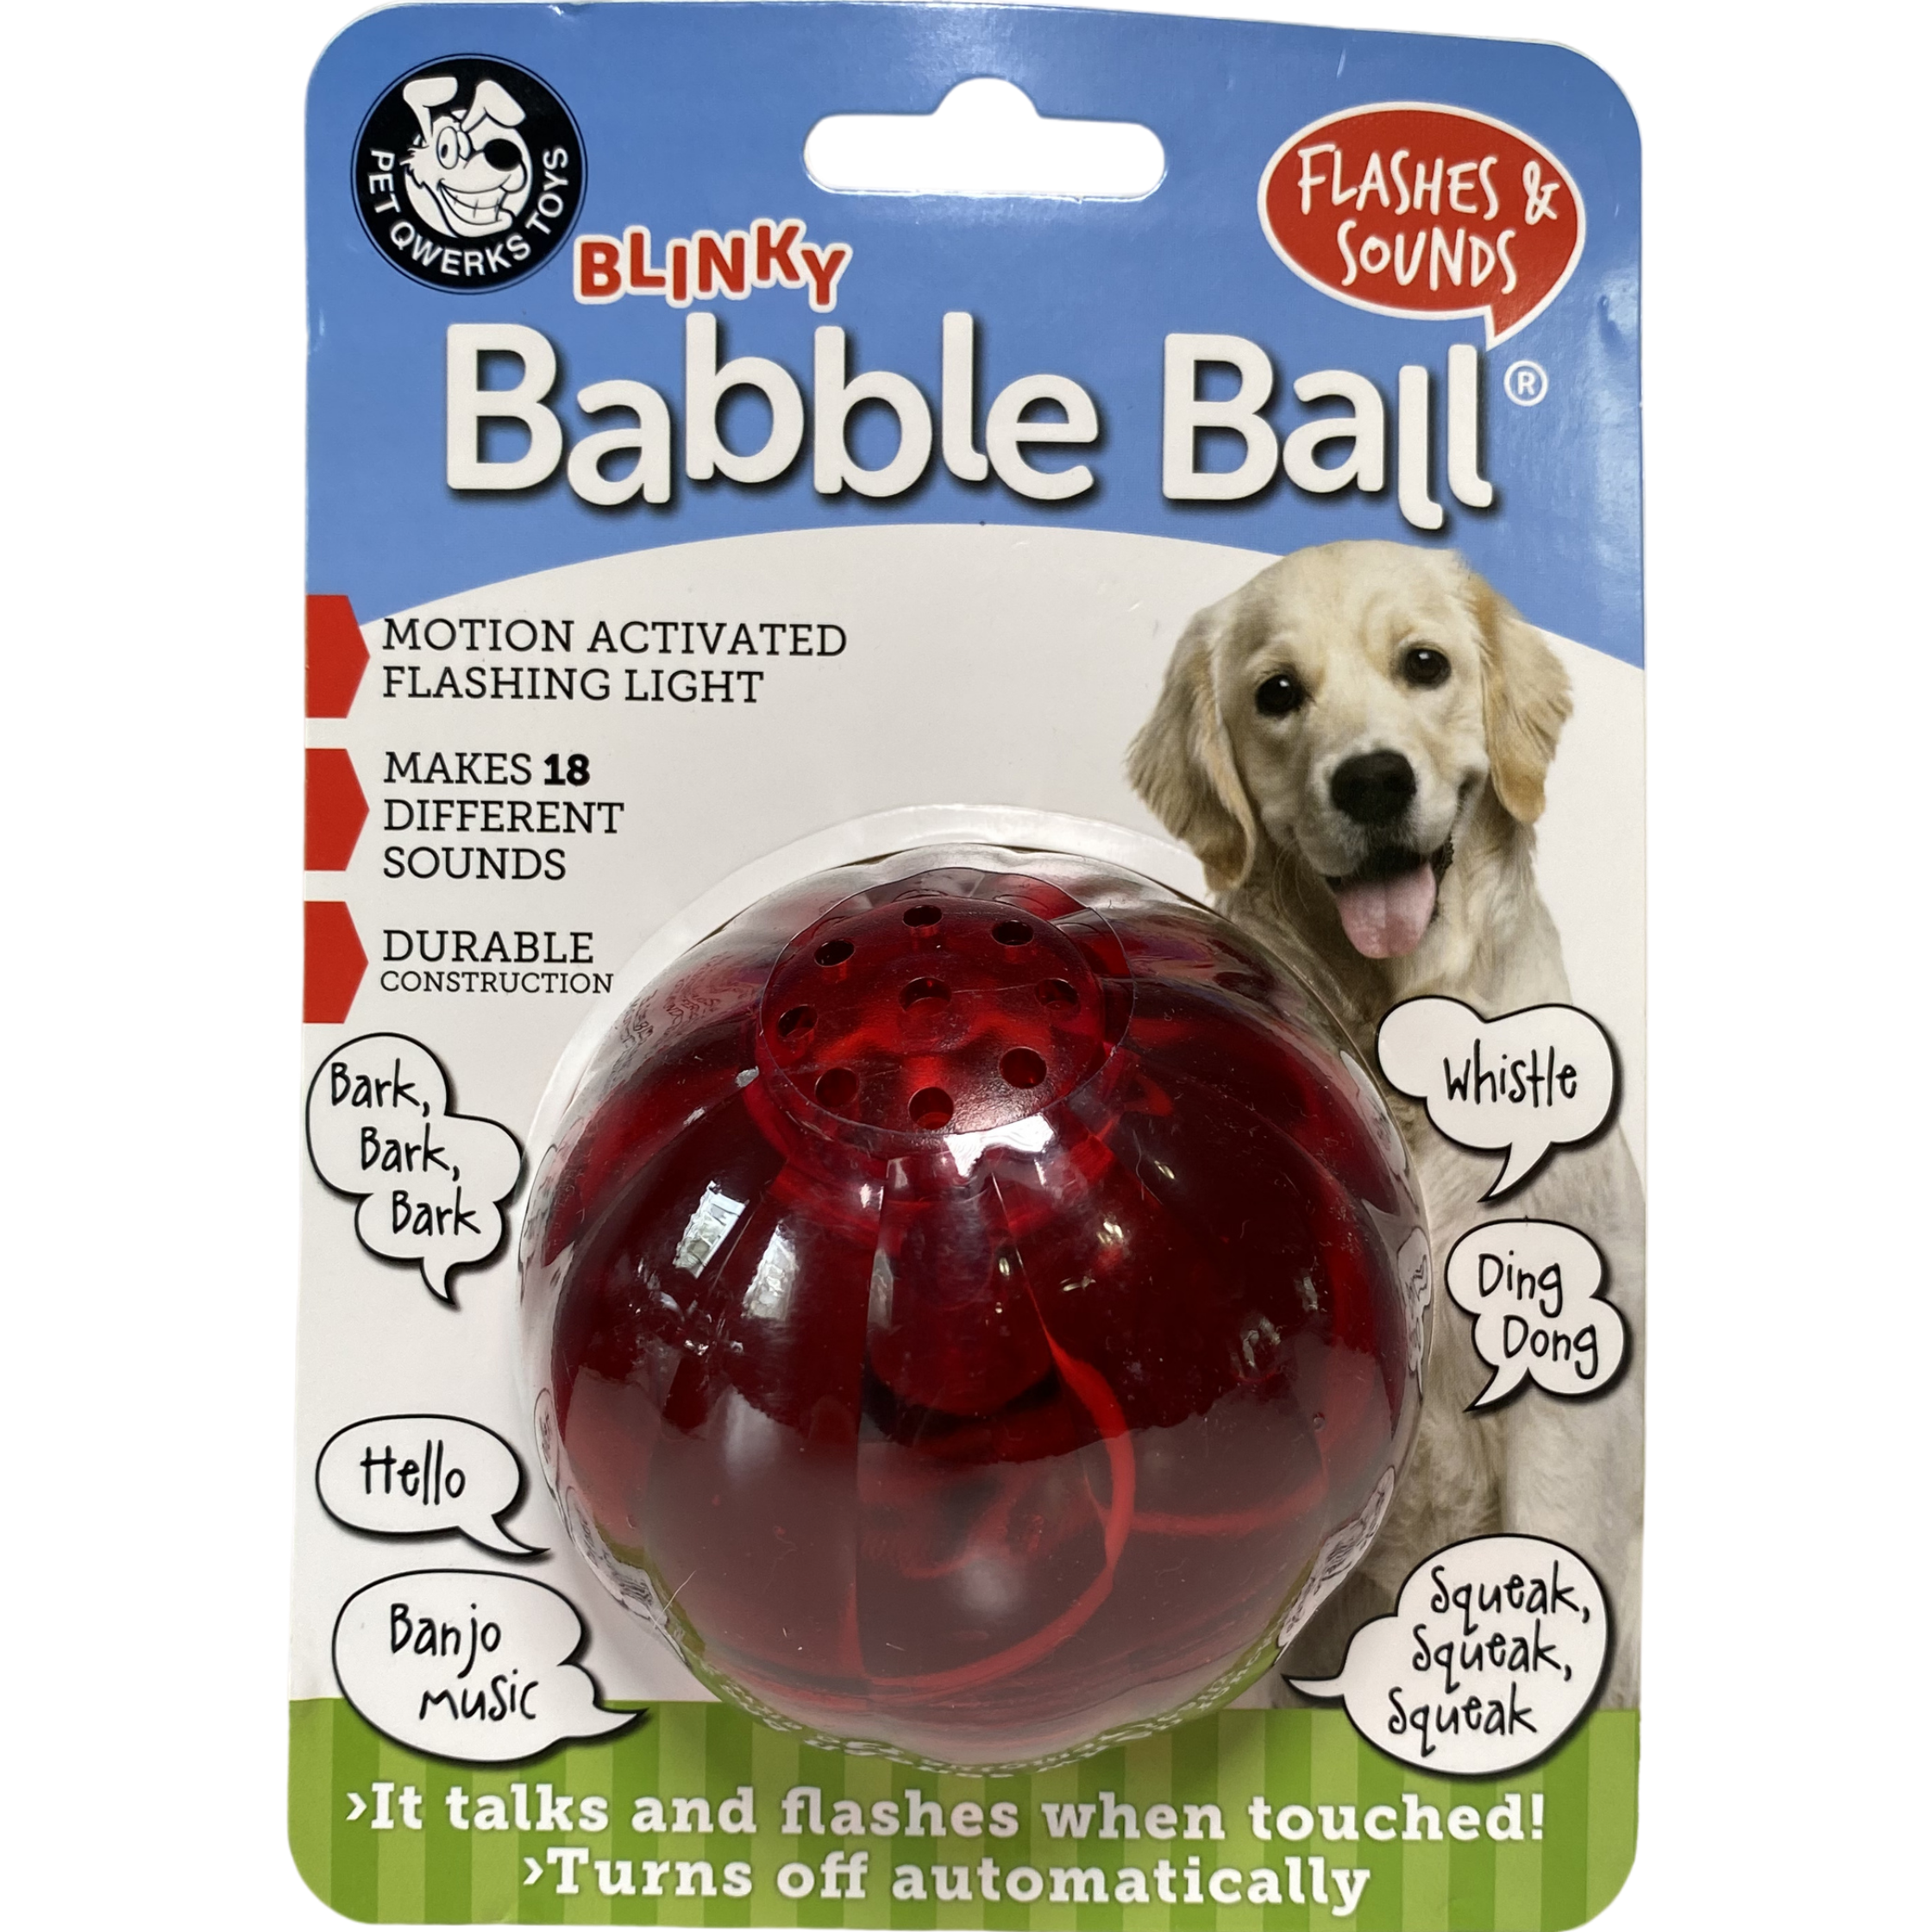 babble ball